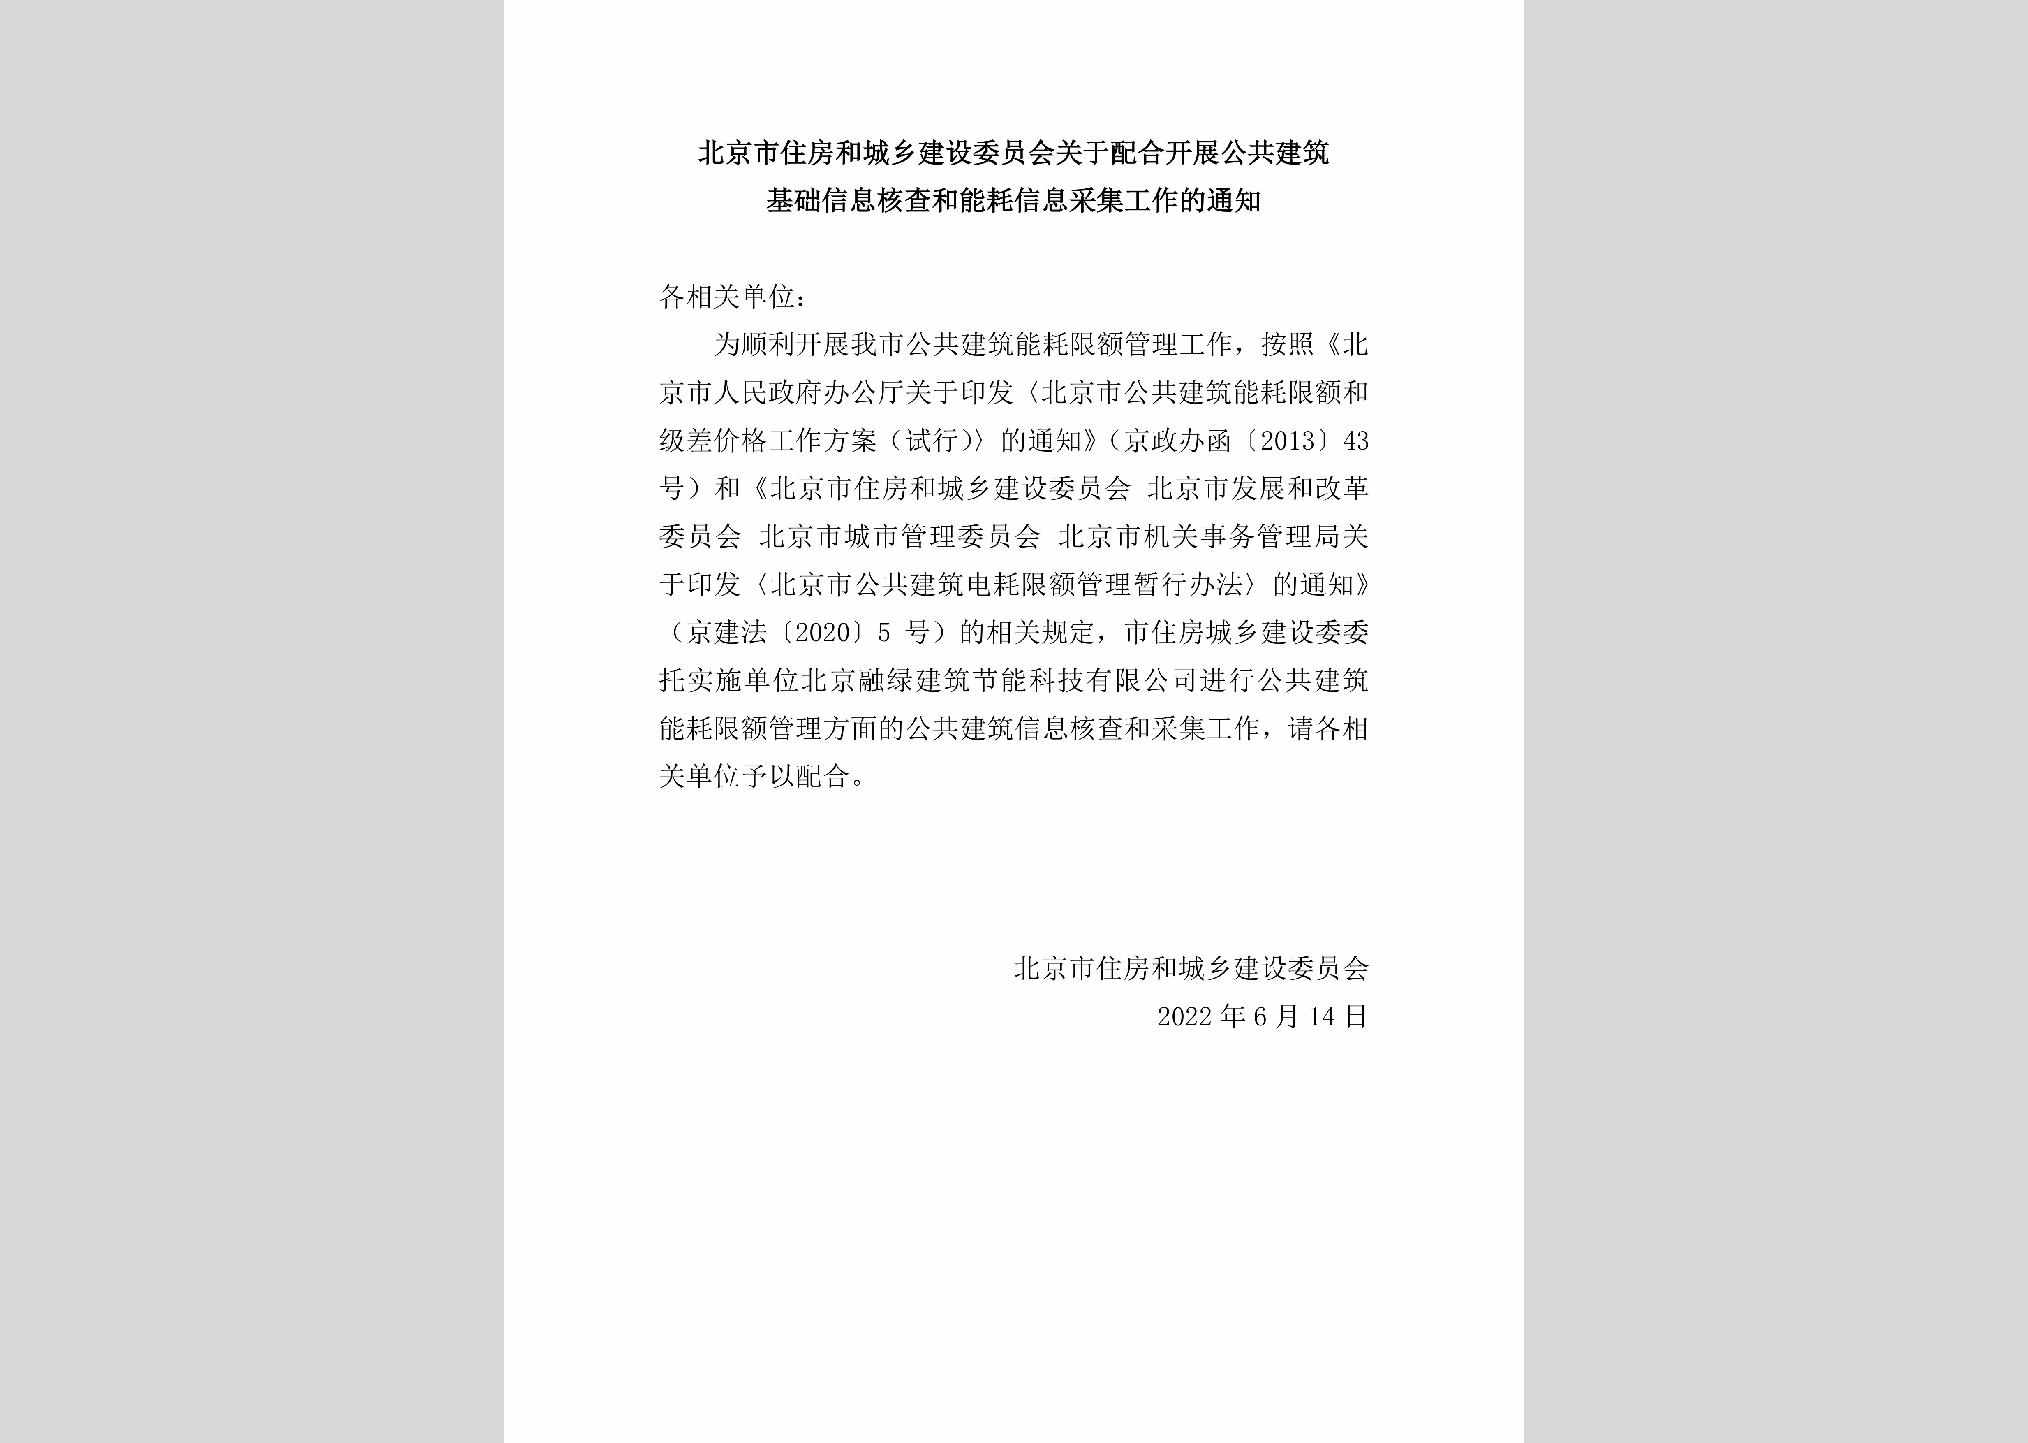 BJ-PHKZGGJZ-2022：北京市住房和城乡建设委员会关于配合开展公共建筑基础信息核查和能耗信息采集工作的通知